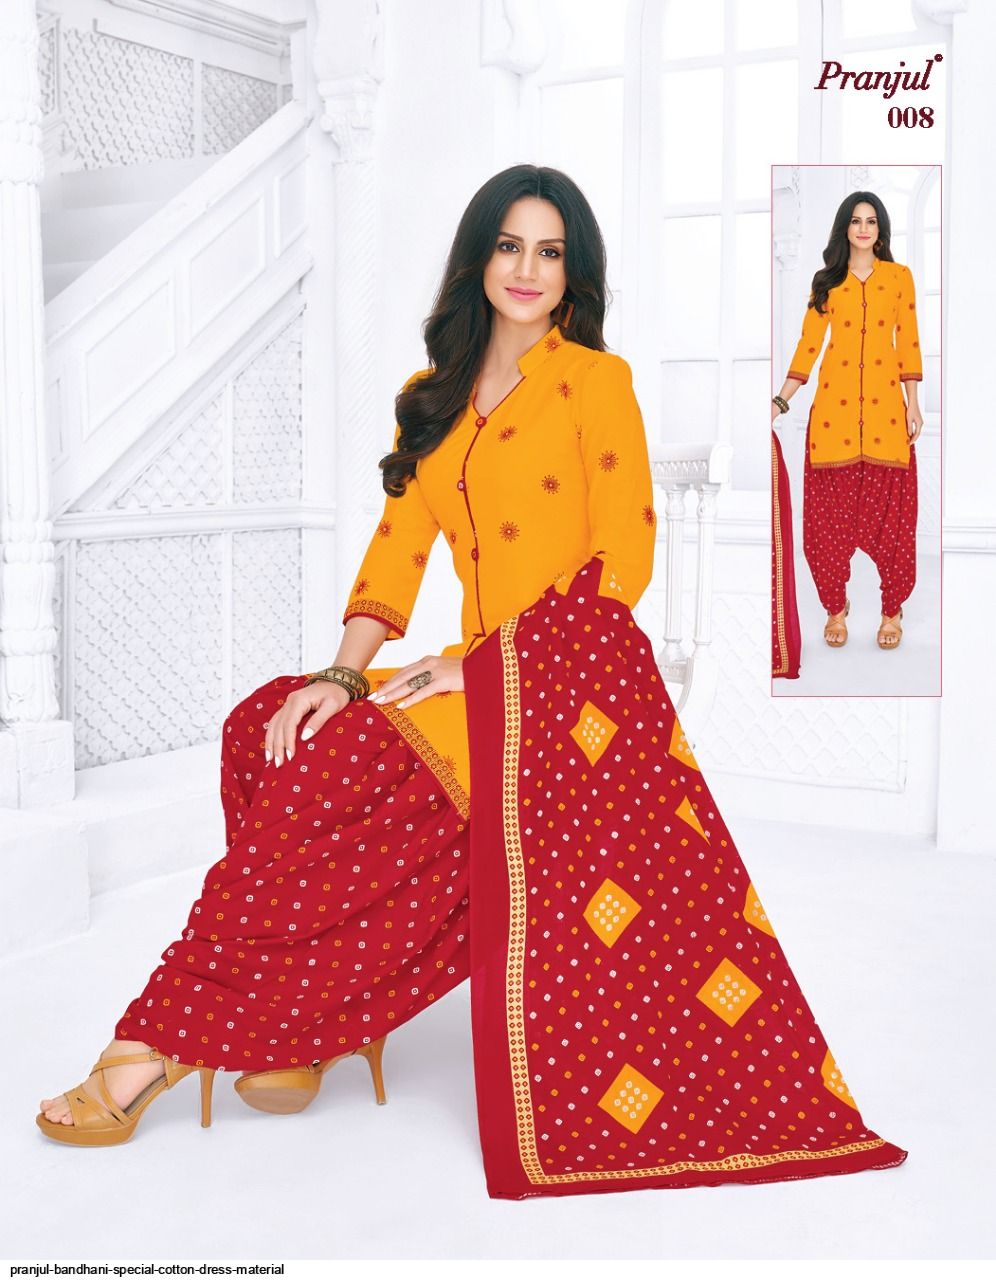 Priyanshi Vol 28 Pranjul Cotton Dress Material